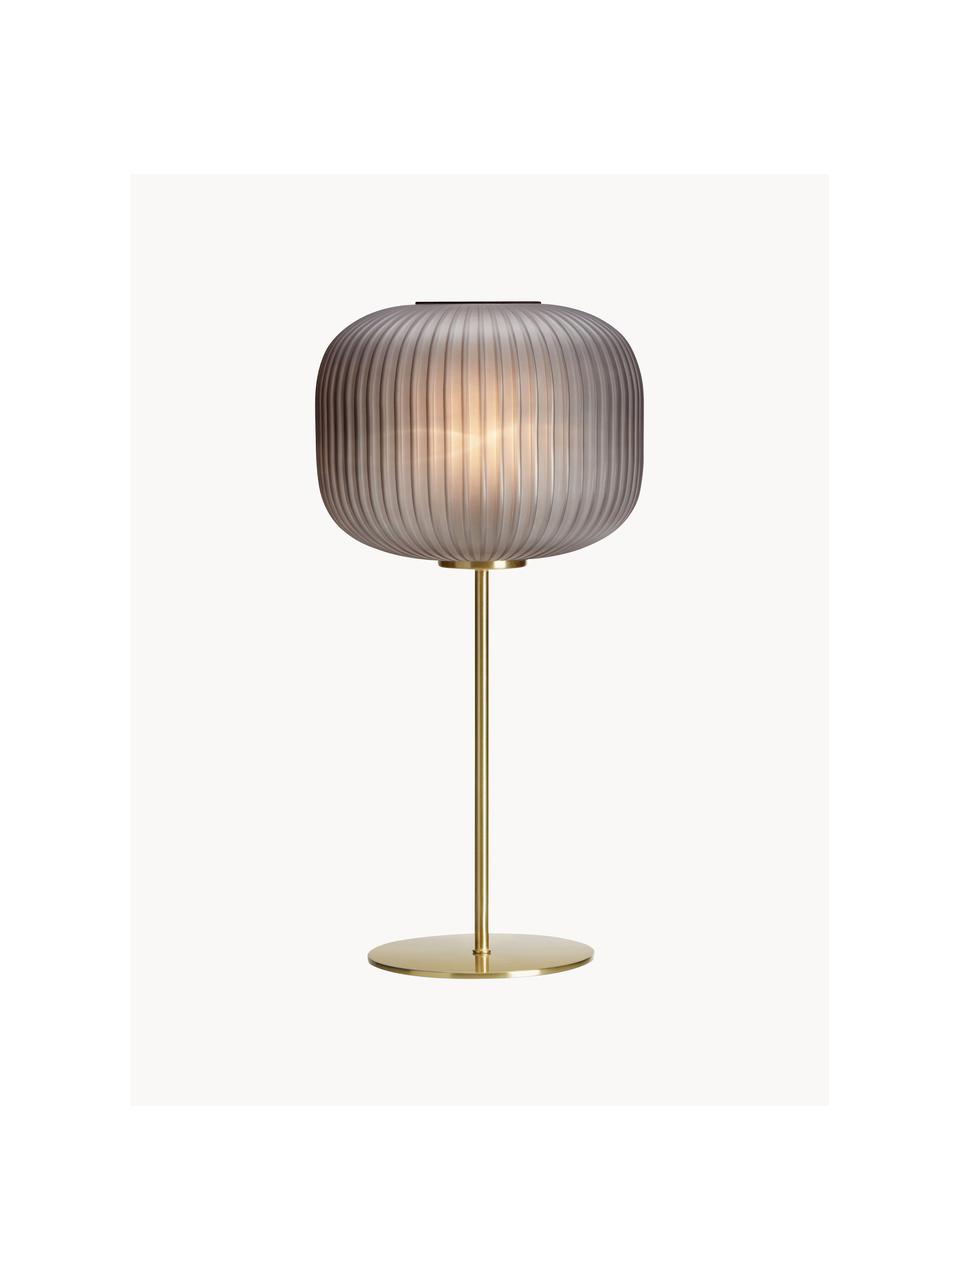 Grote tafellamp Sober met glazen lampenkap, Lampenkap: glas, Lampvoet: geborsteld metaal, Goudkleurig, grijs, Ø 25 x H 50 cm